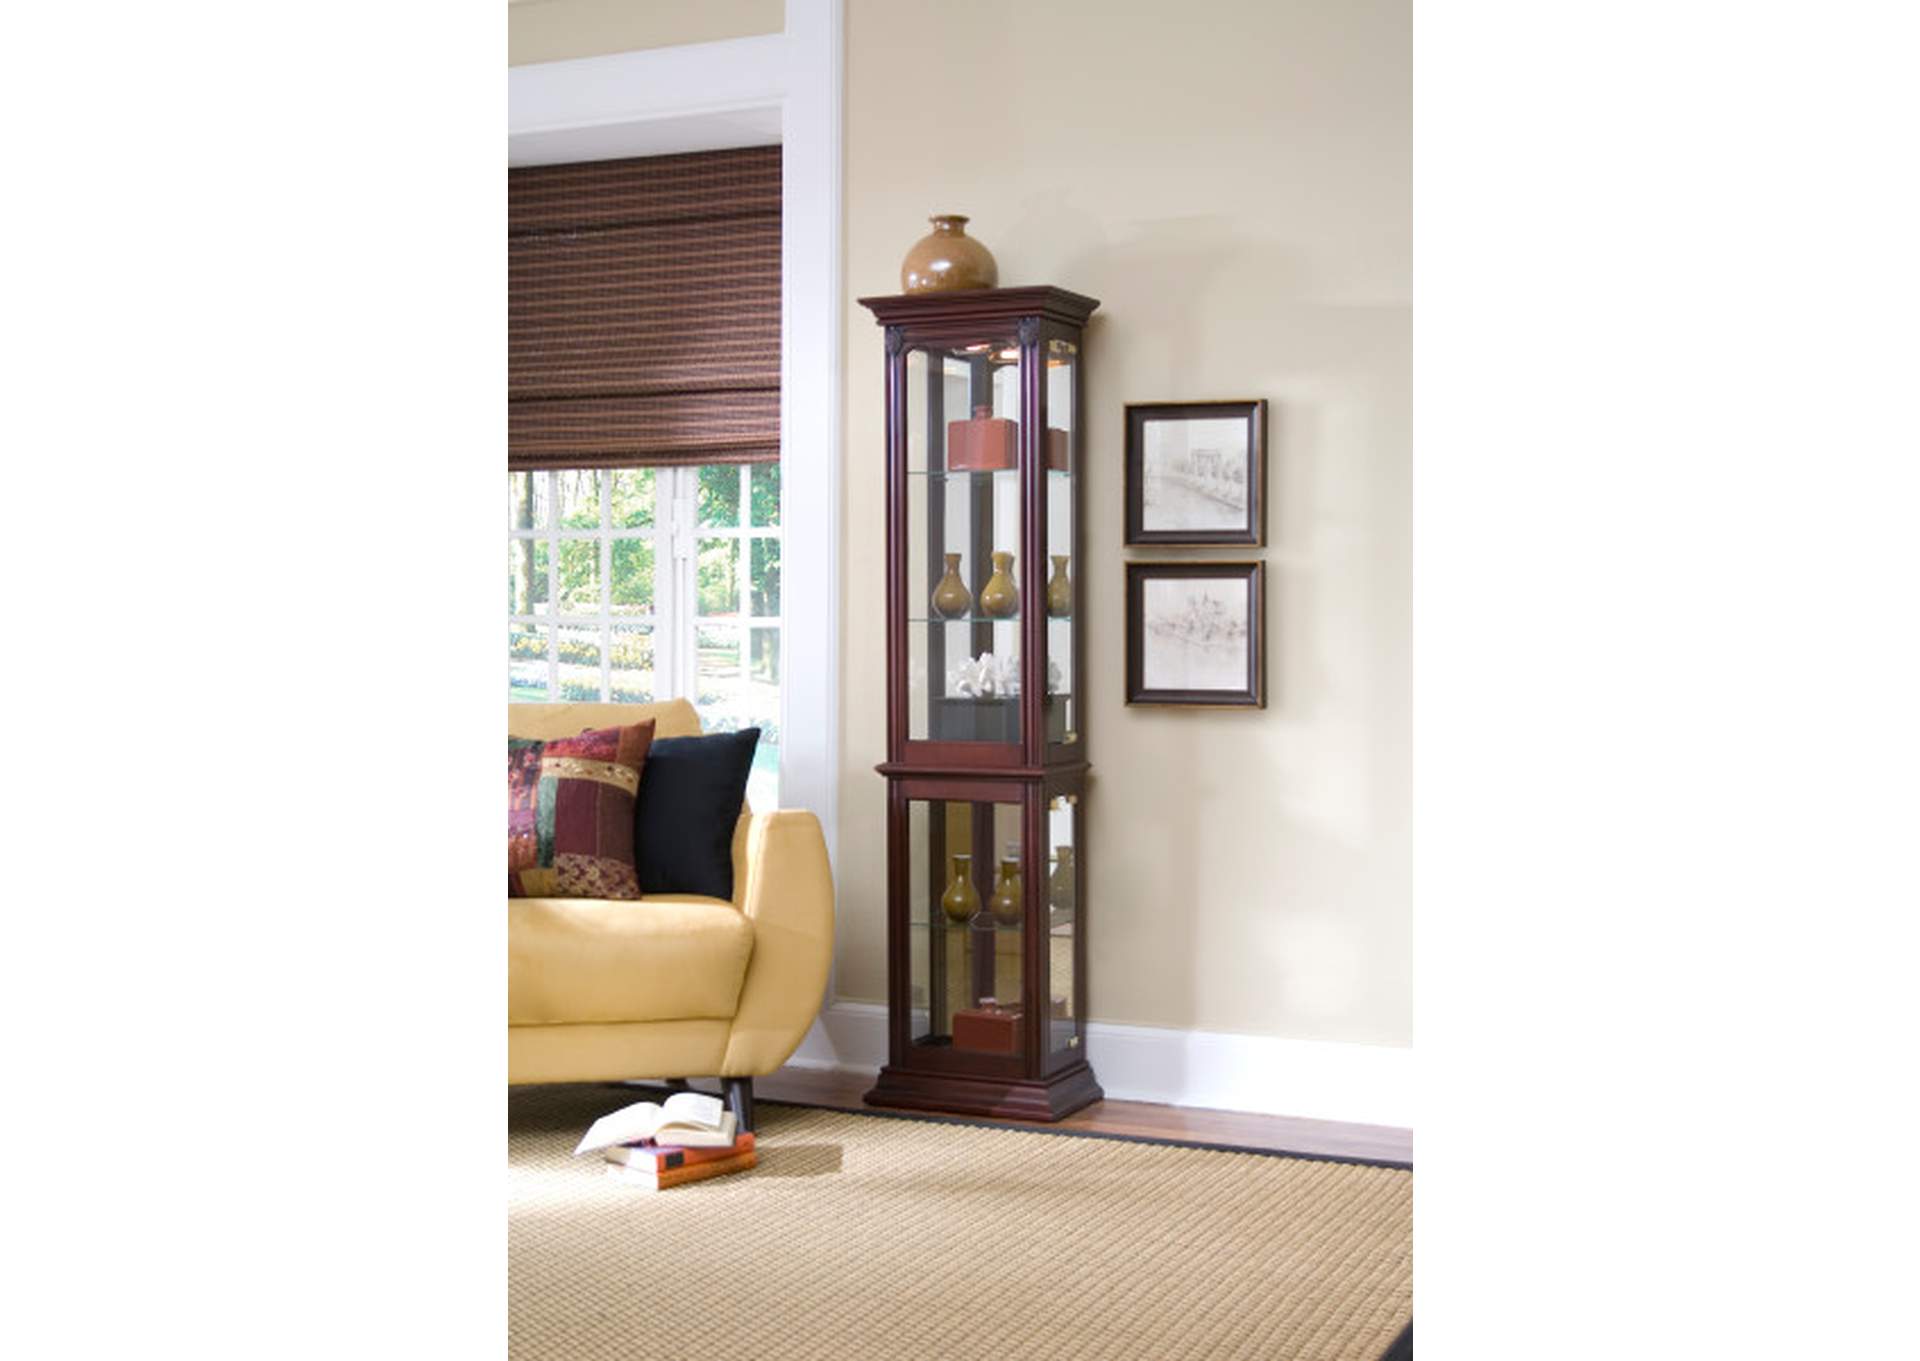 Gallery Style 4 Shelf Curio Cabinet in Warm Cherry Brown,Pulaski Furniture